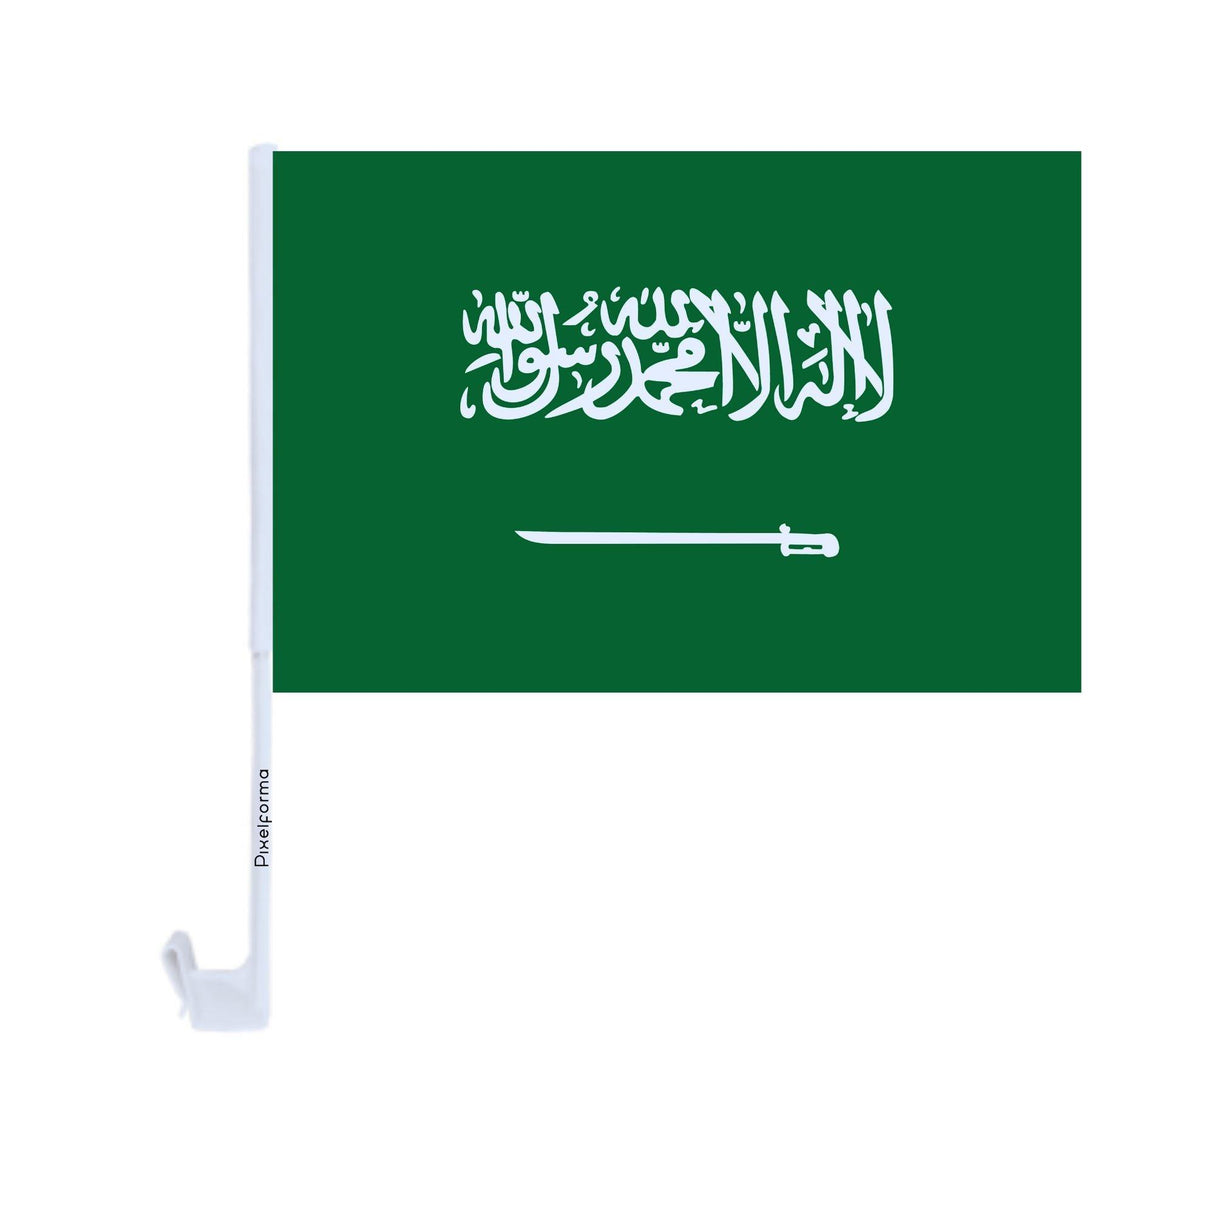 Drapeau voiture de l'Arabie saoudite en polyester - Pixelforma 